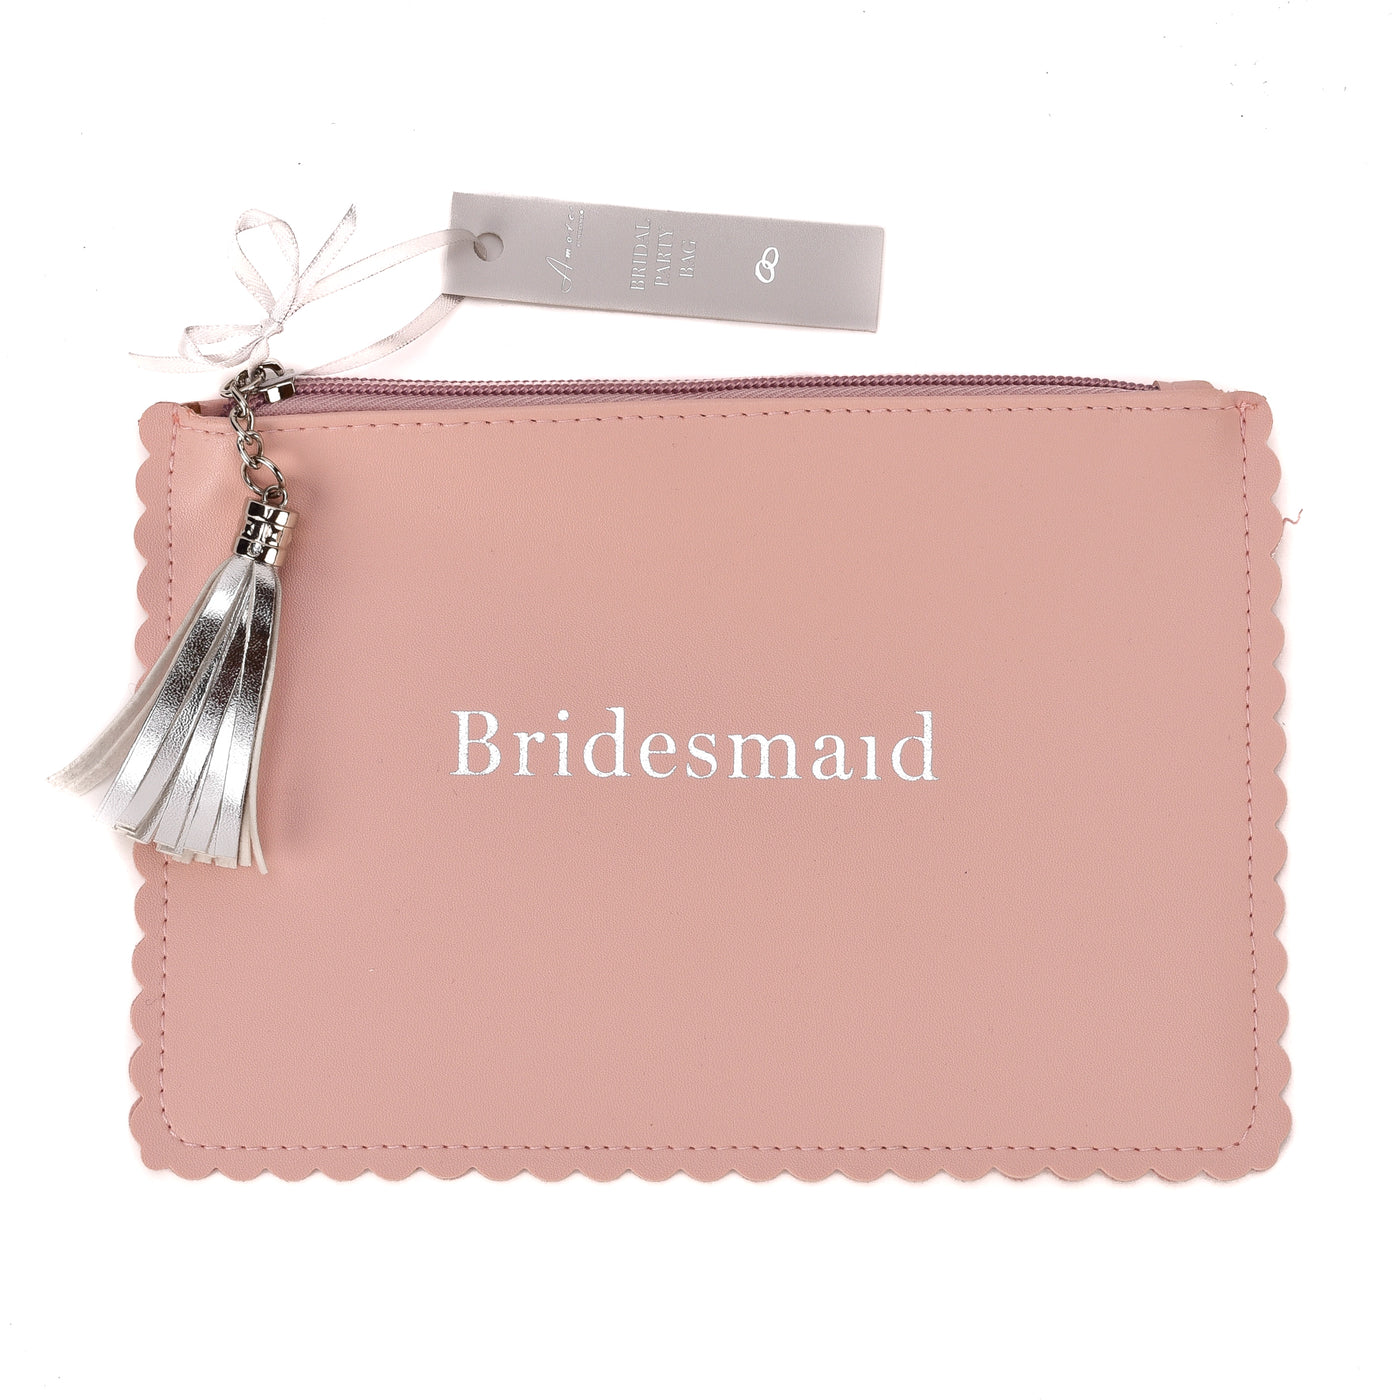 Bridesmaid Clutch Bag